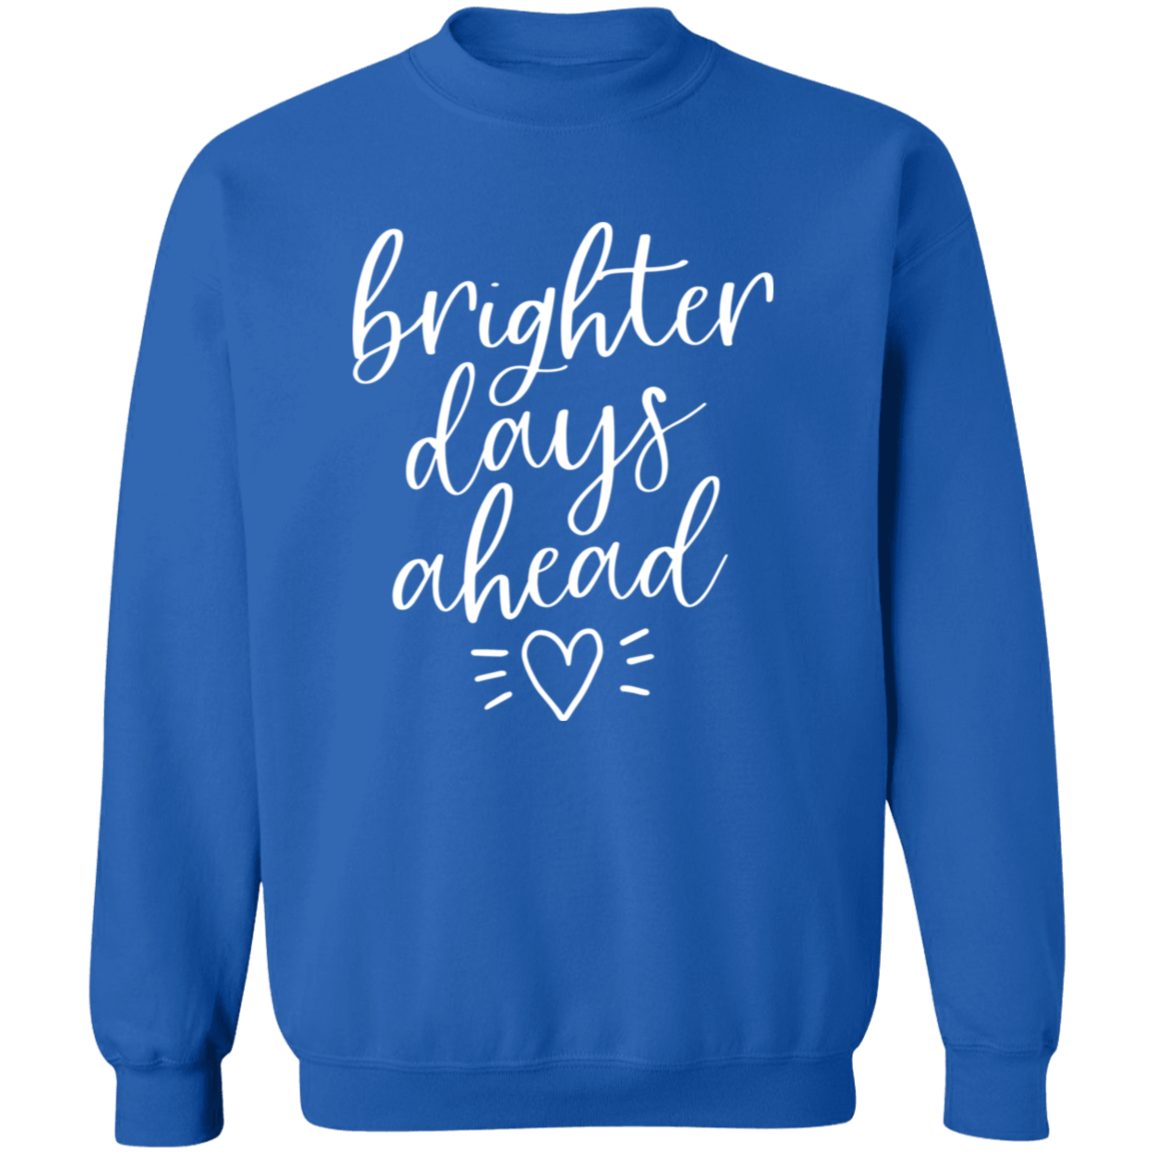 Brighter Days Ahead Sweatshirt